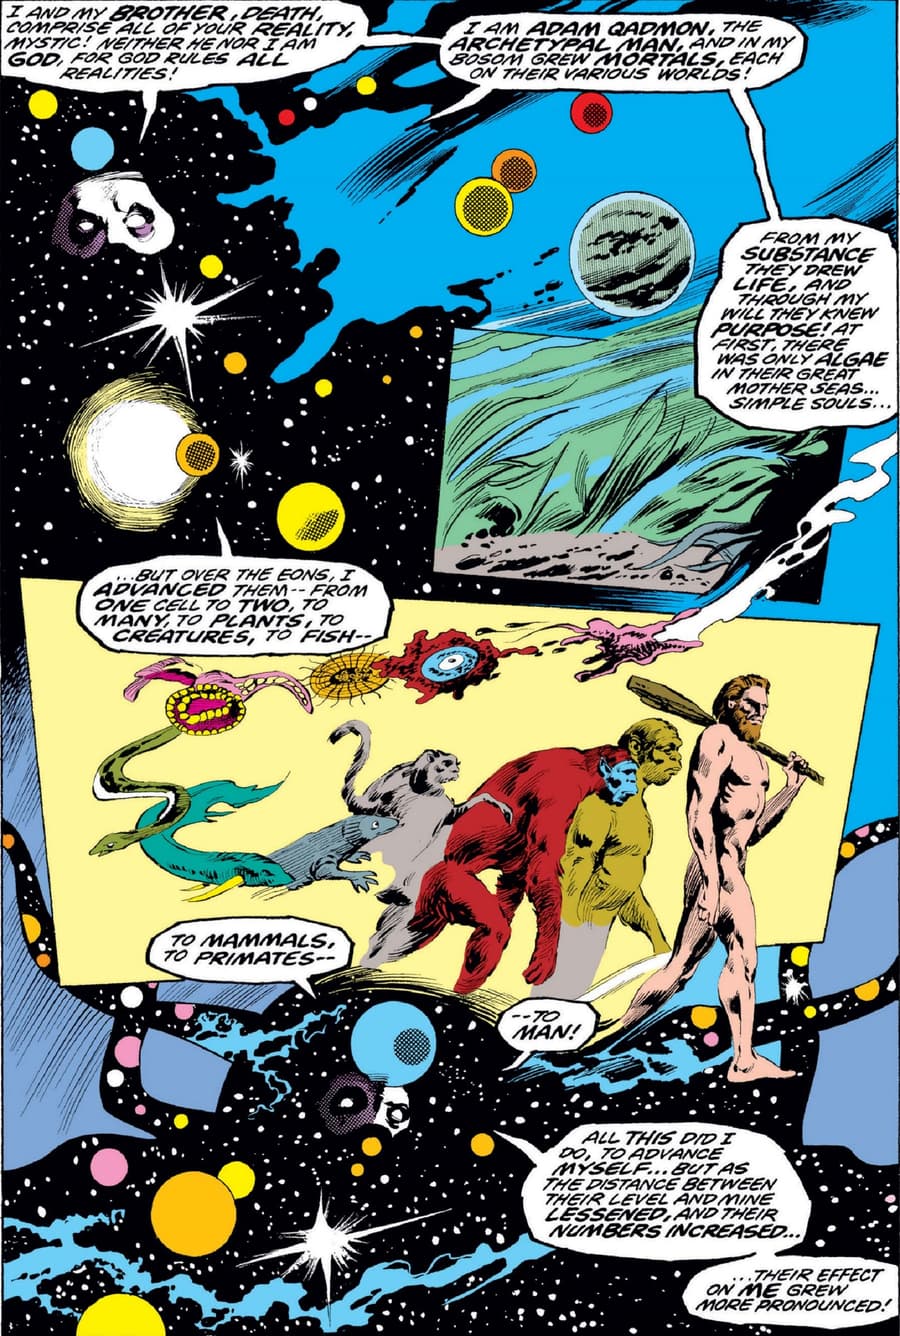 Eternity's influence over humankind's evolution in DOCTOR STRANGE (1974) #13.